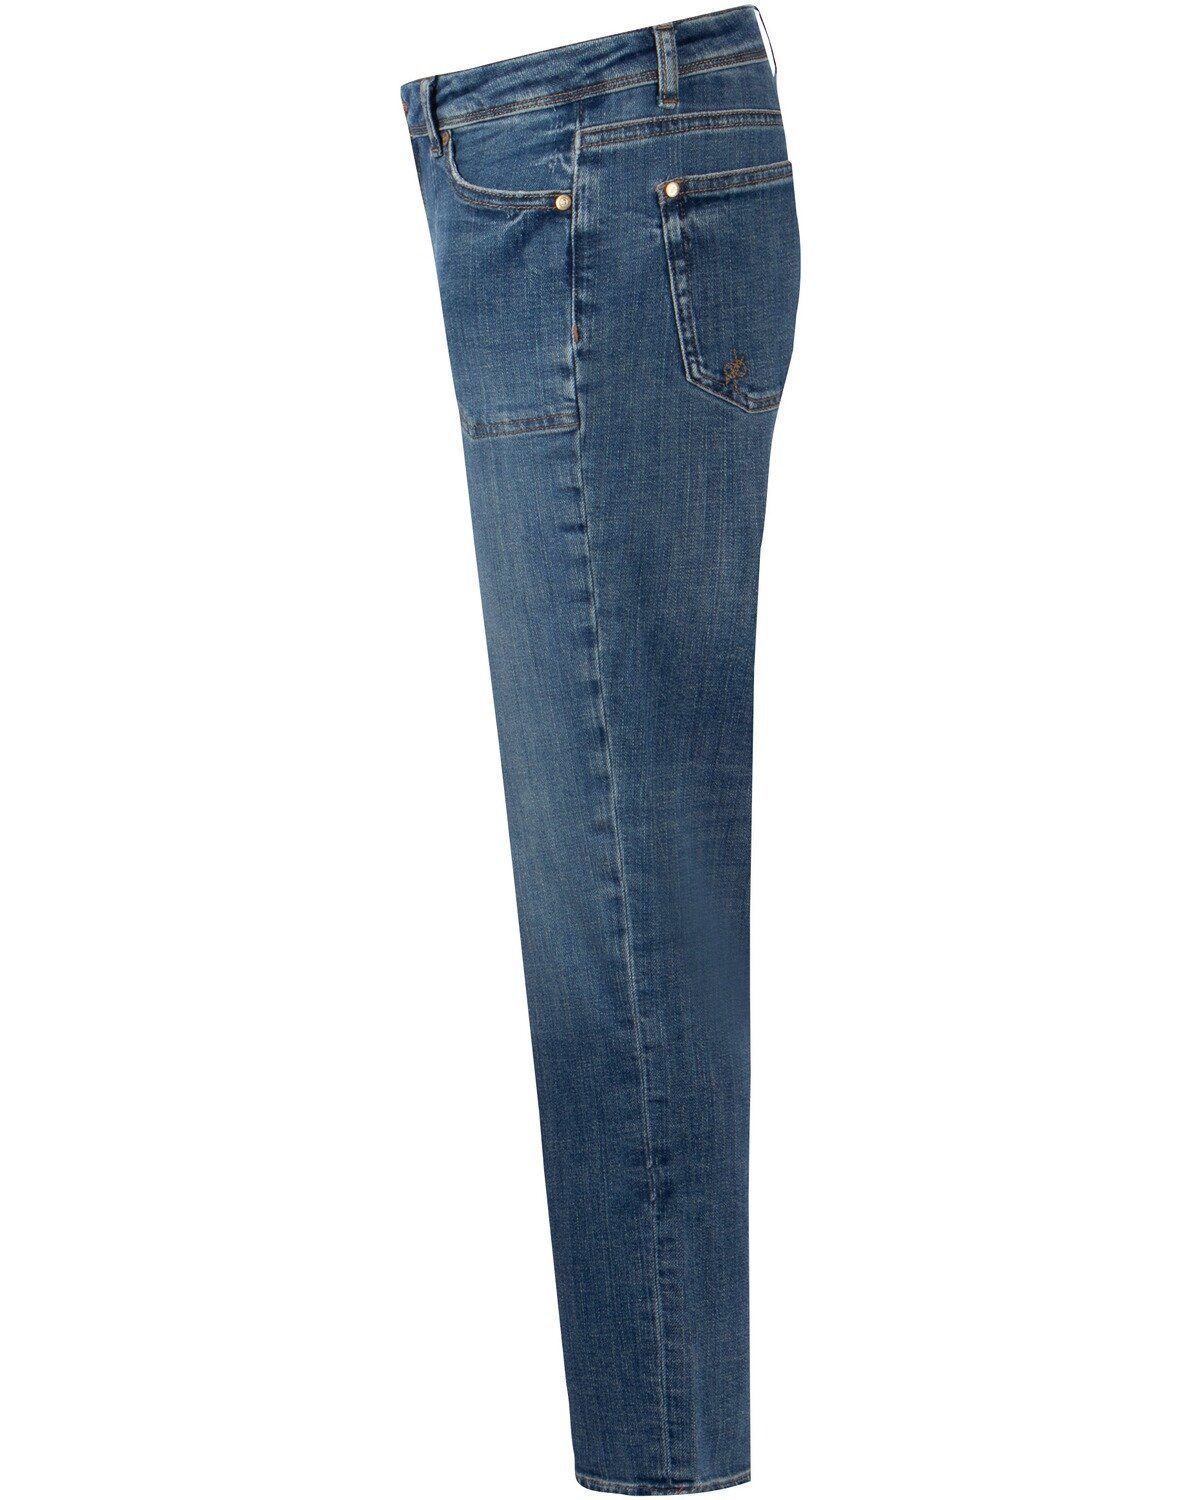 Leyle Rossi Jeans Raffaello 5-Pocket-Jeans